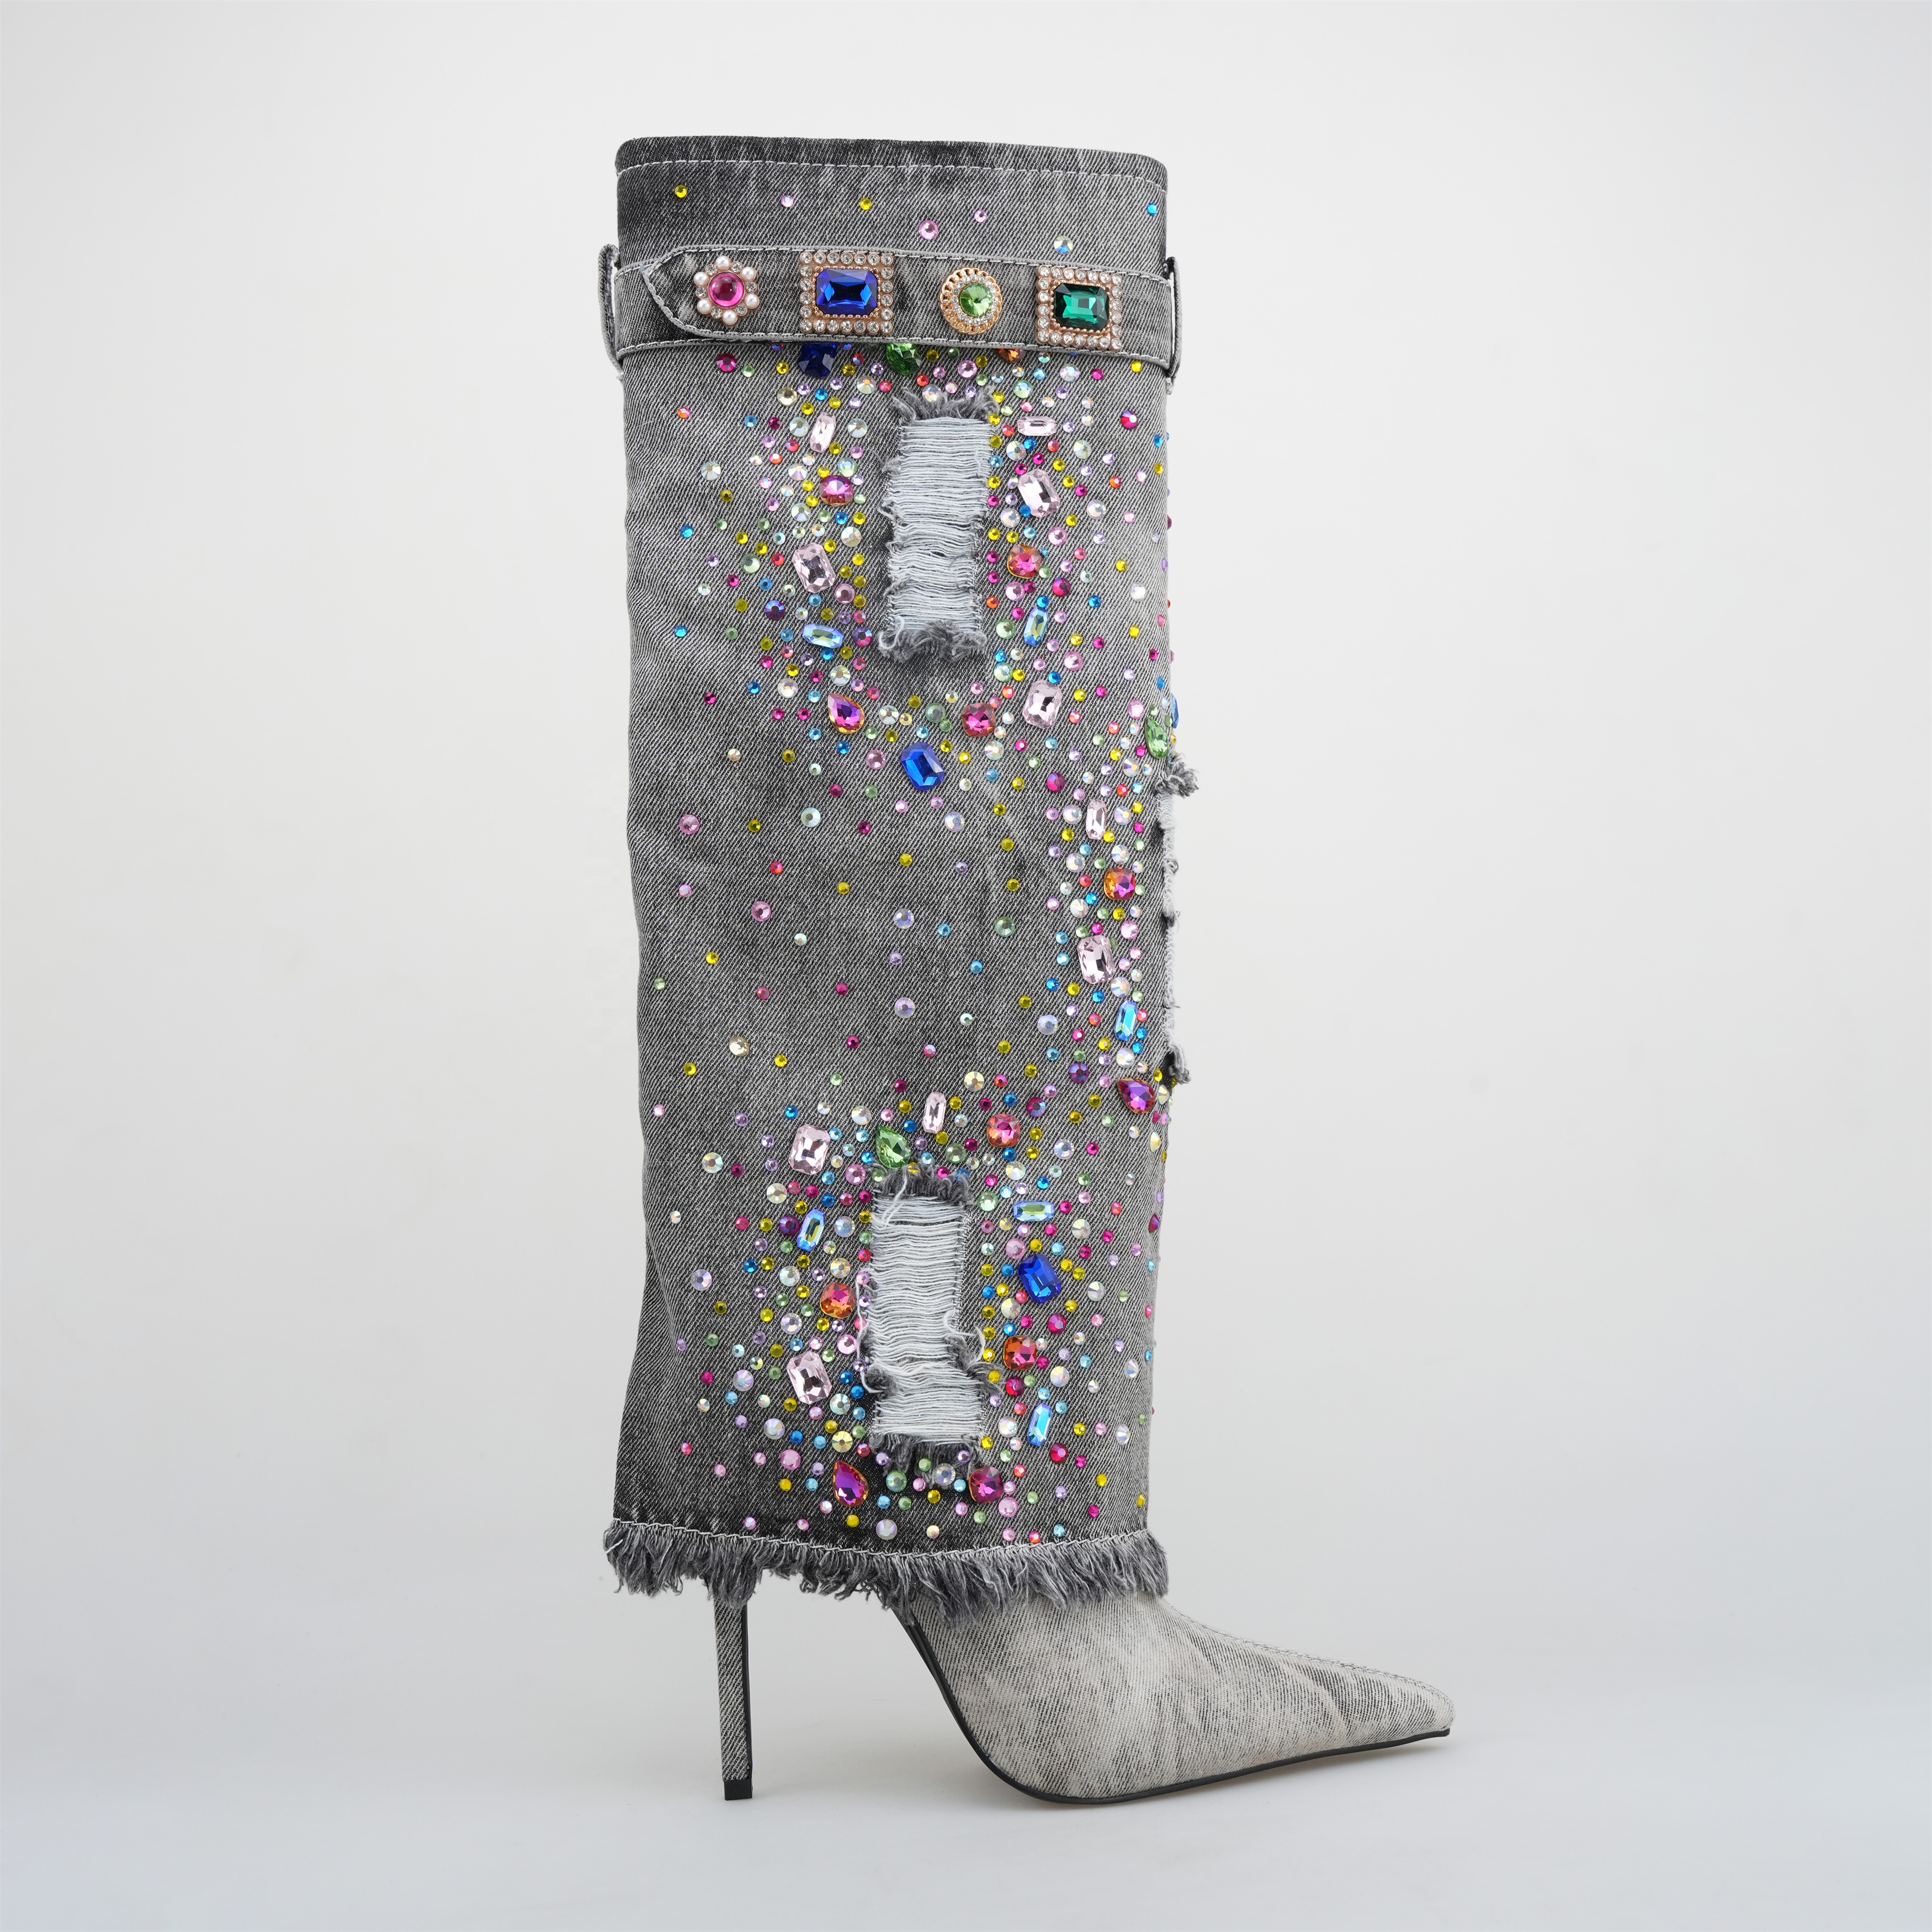 TAAFO Rehine Stone Women High Heel Pointed Toe Denim Boots Over Knee Boots Stiletto Heel